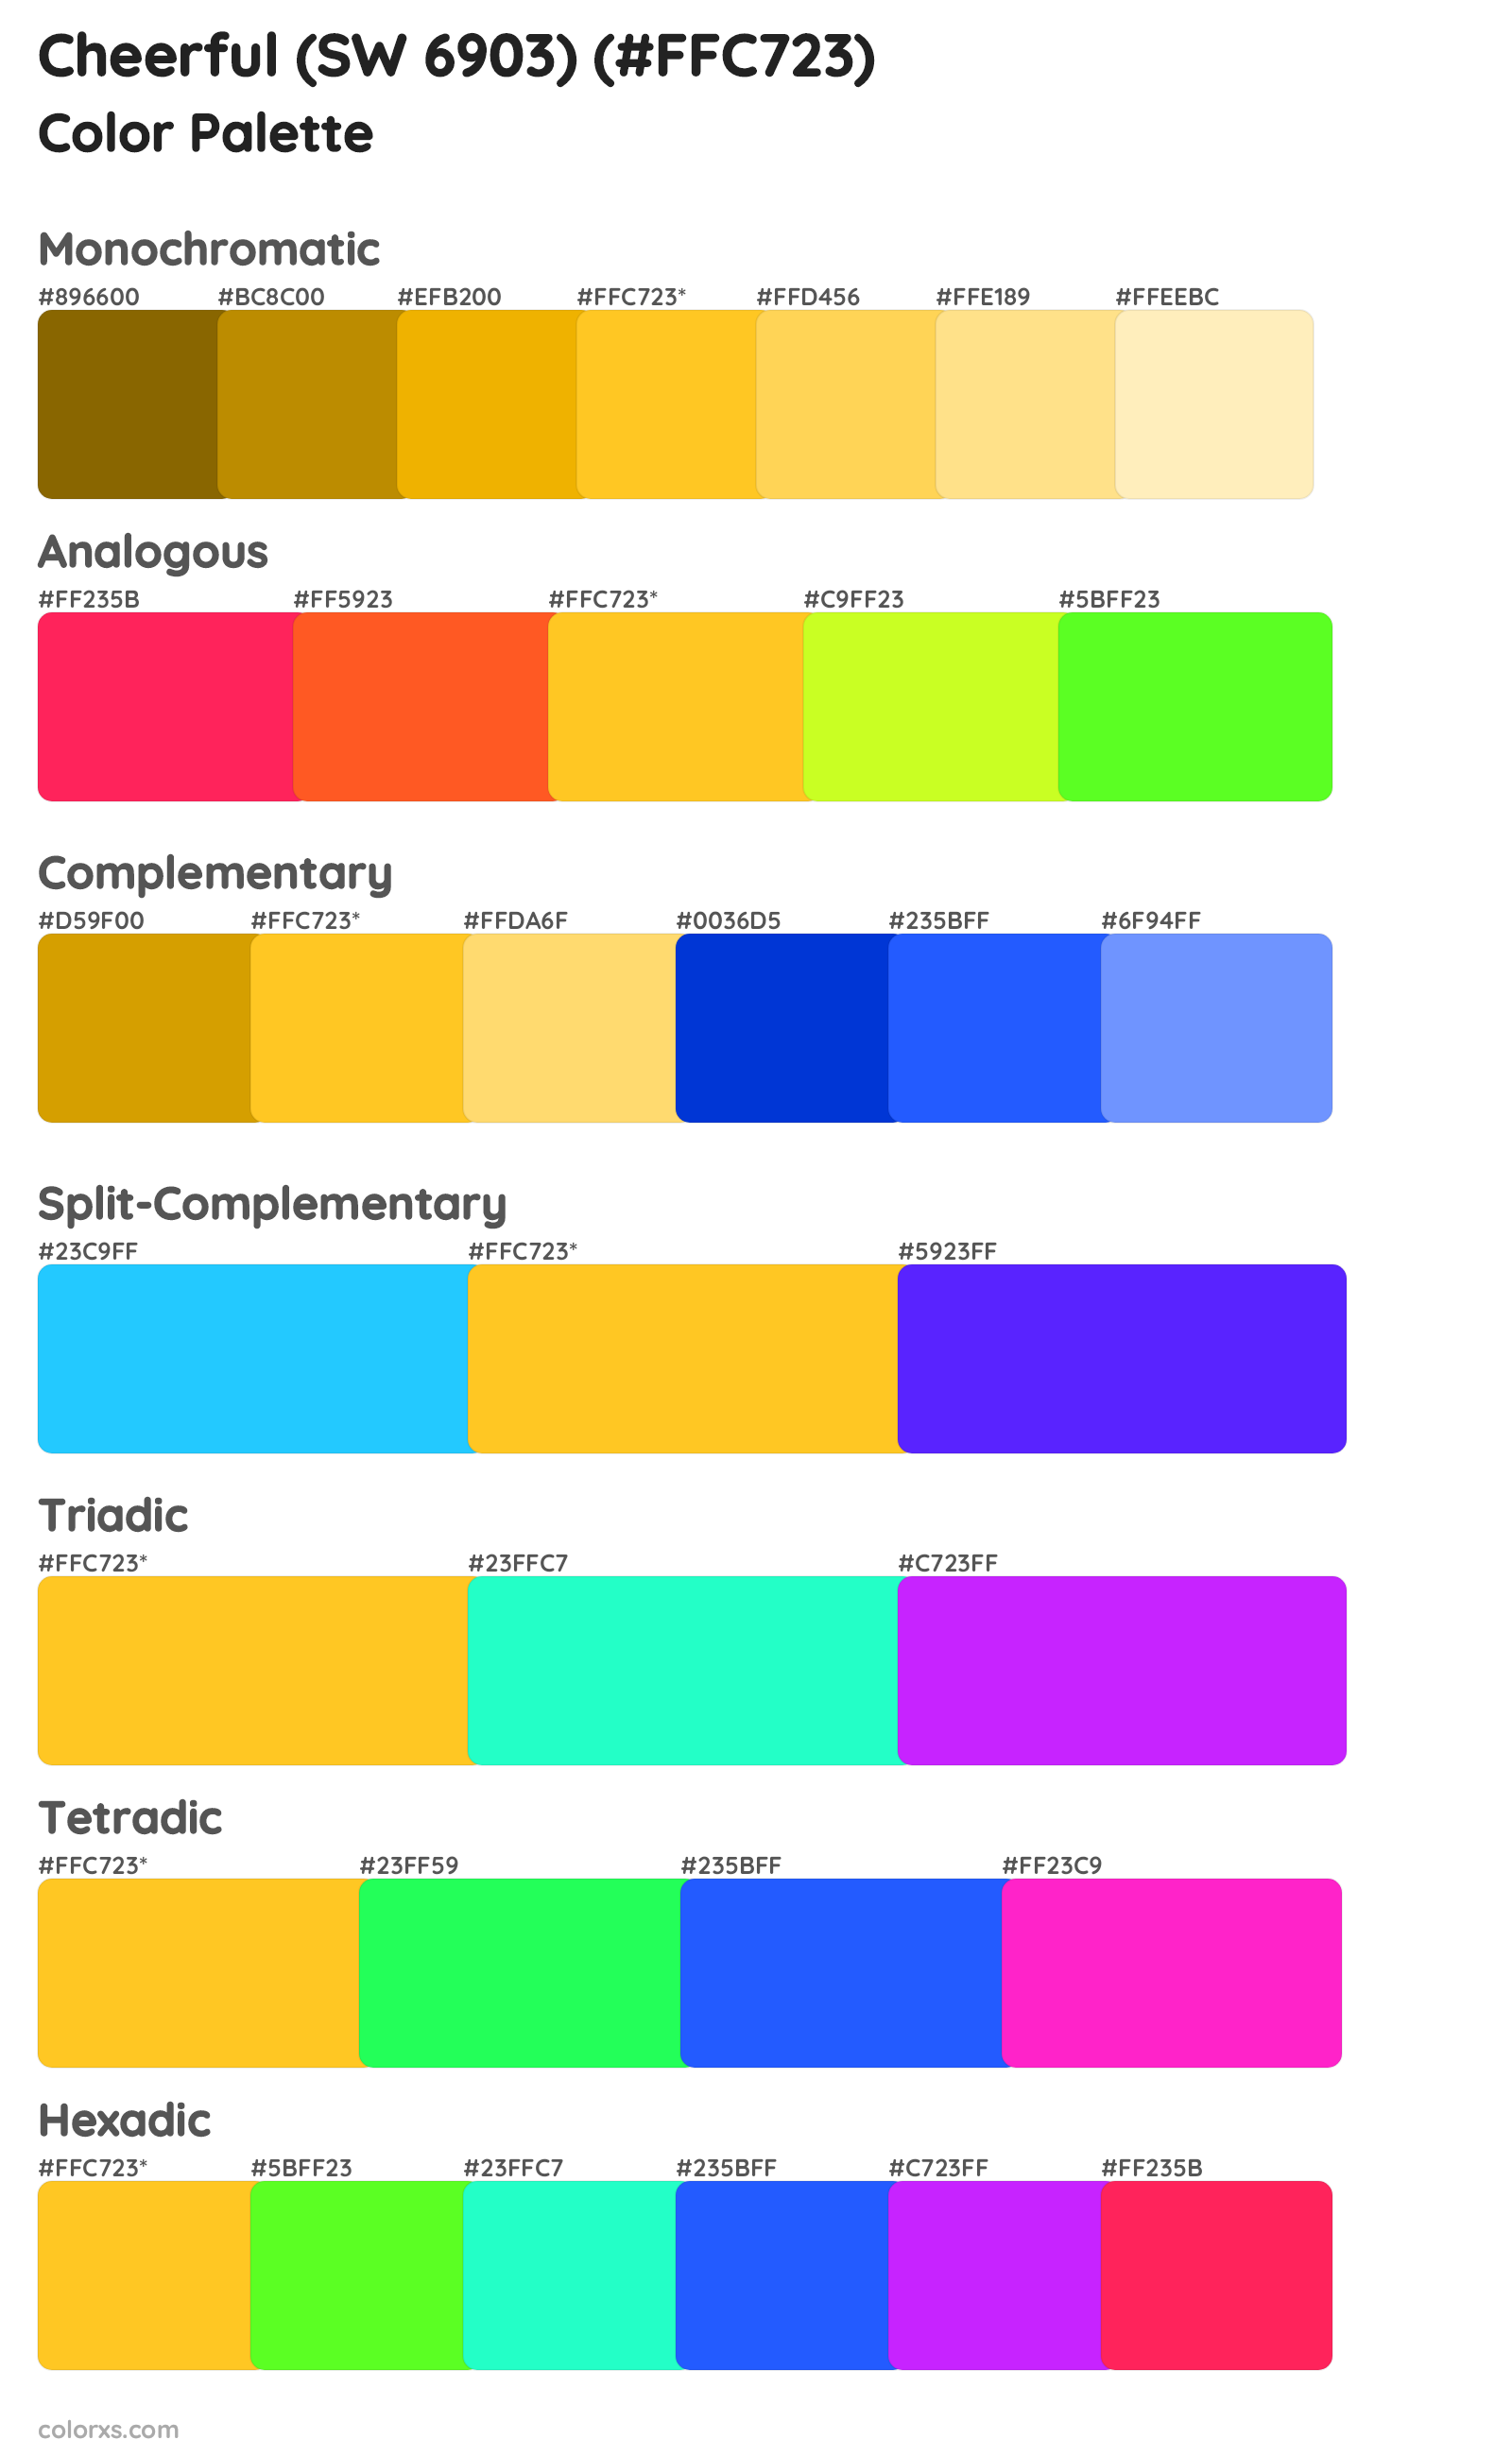 Cheerful (SW 6903) Color Scheme Palettes